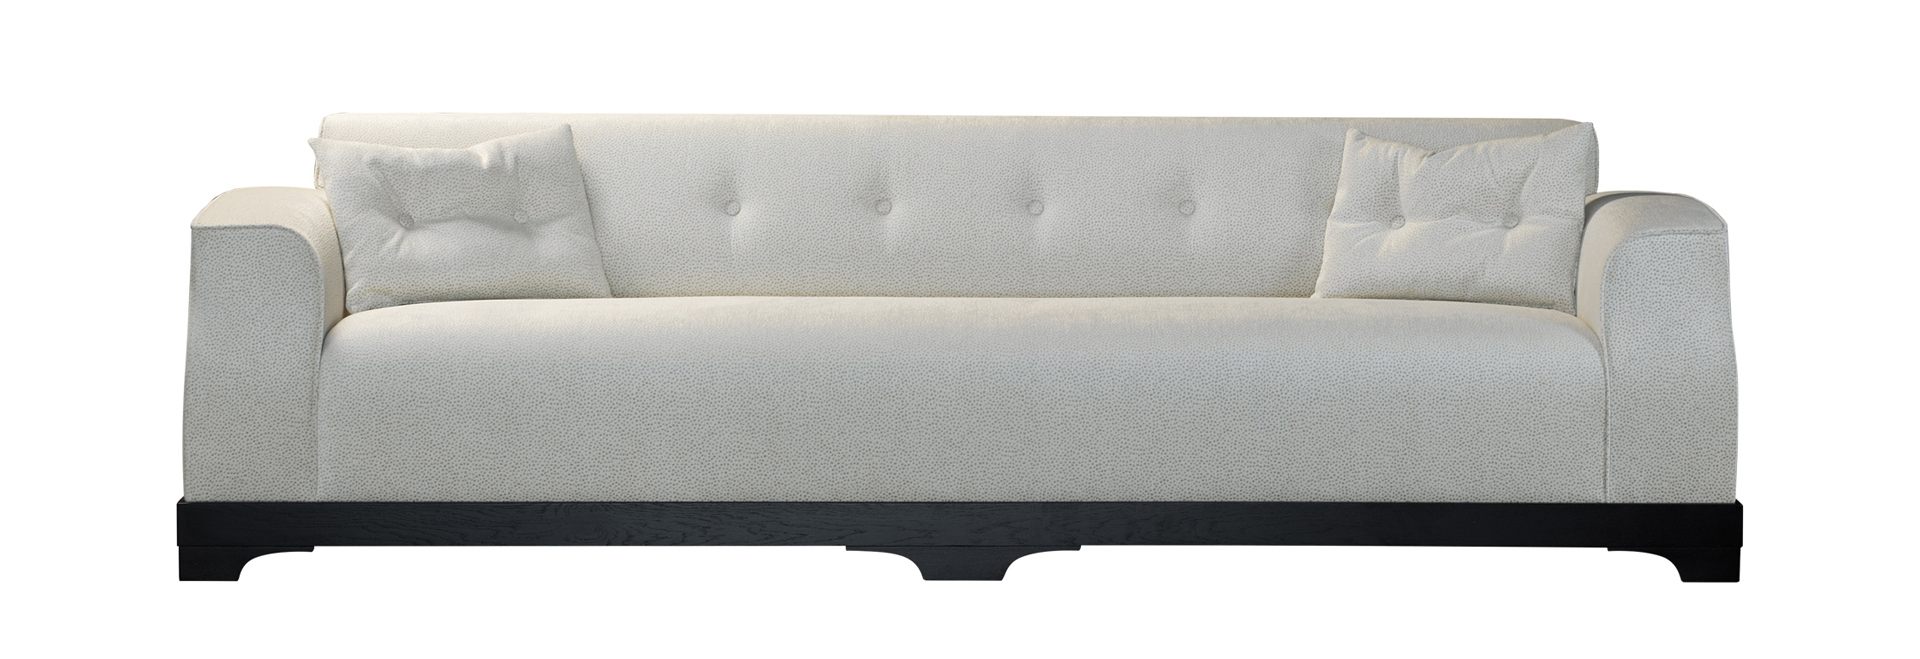 /mediaMogador木质沙发以织物或皮革包衬，并配以哥特式风格沙发靠背和靠垫，请参见Promemoria产品目录|Promemoria